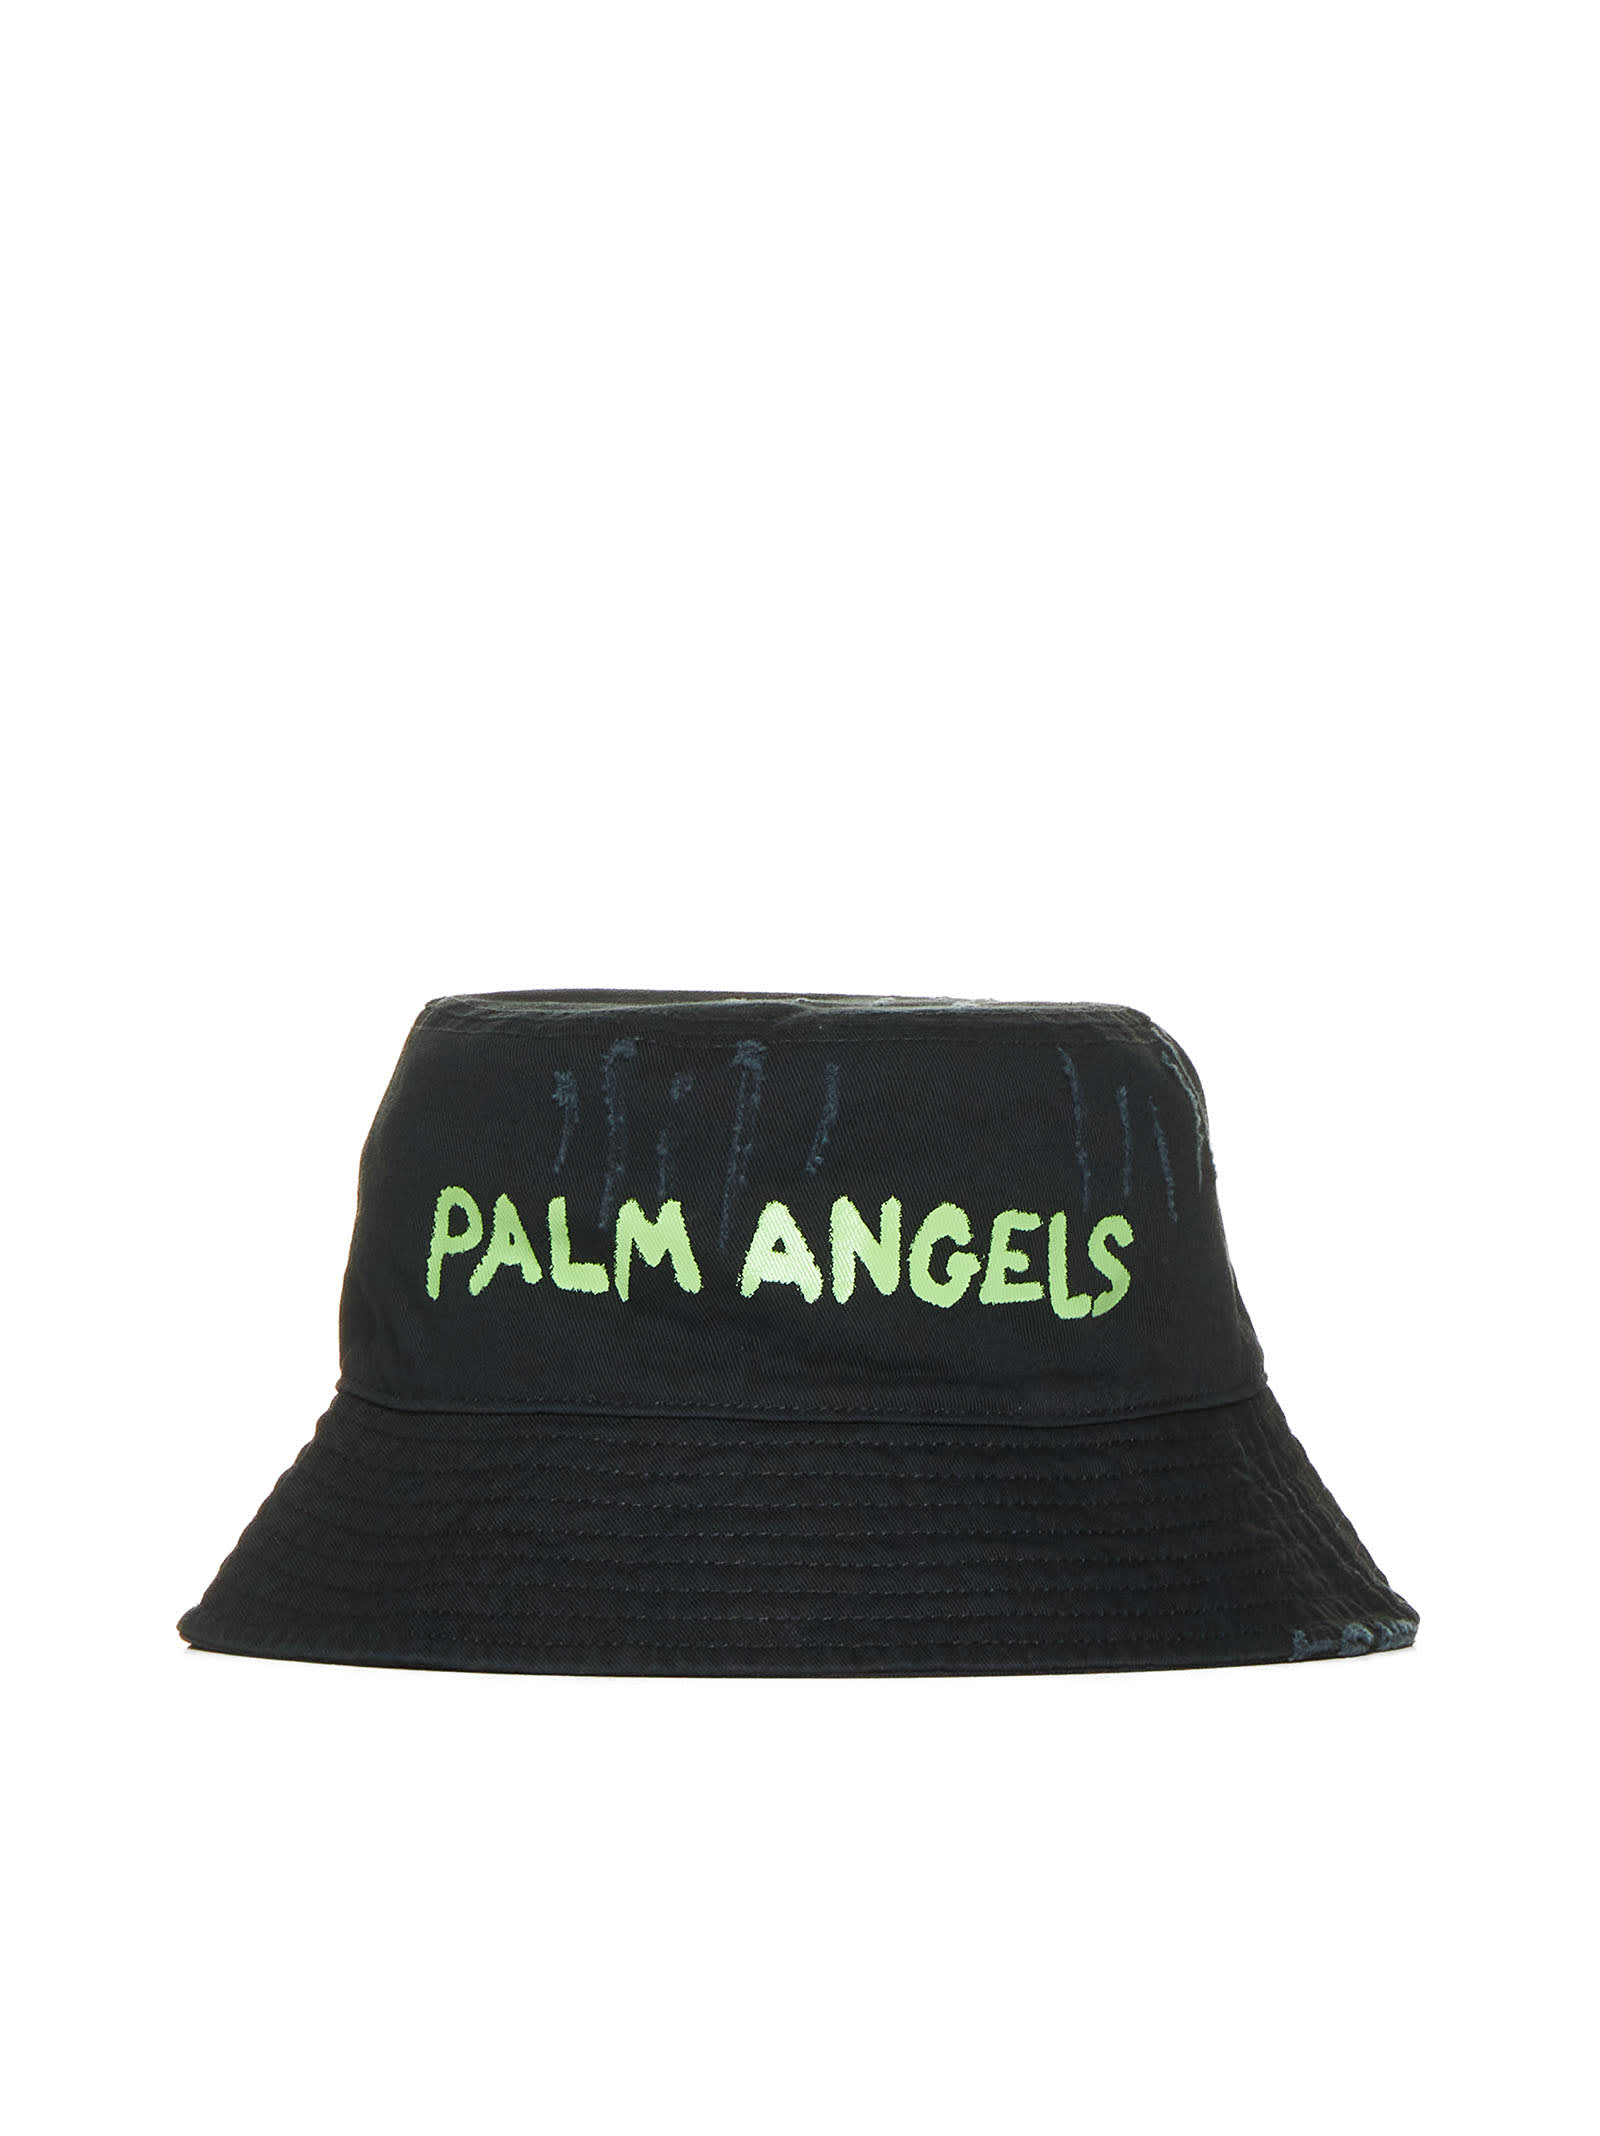 Palm Angels Logo Printed Distressed Bucket Hat